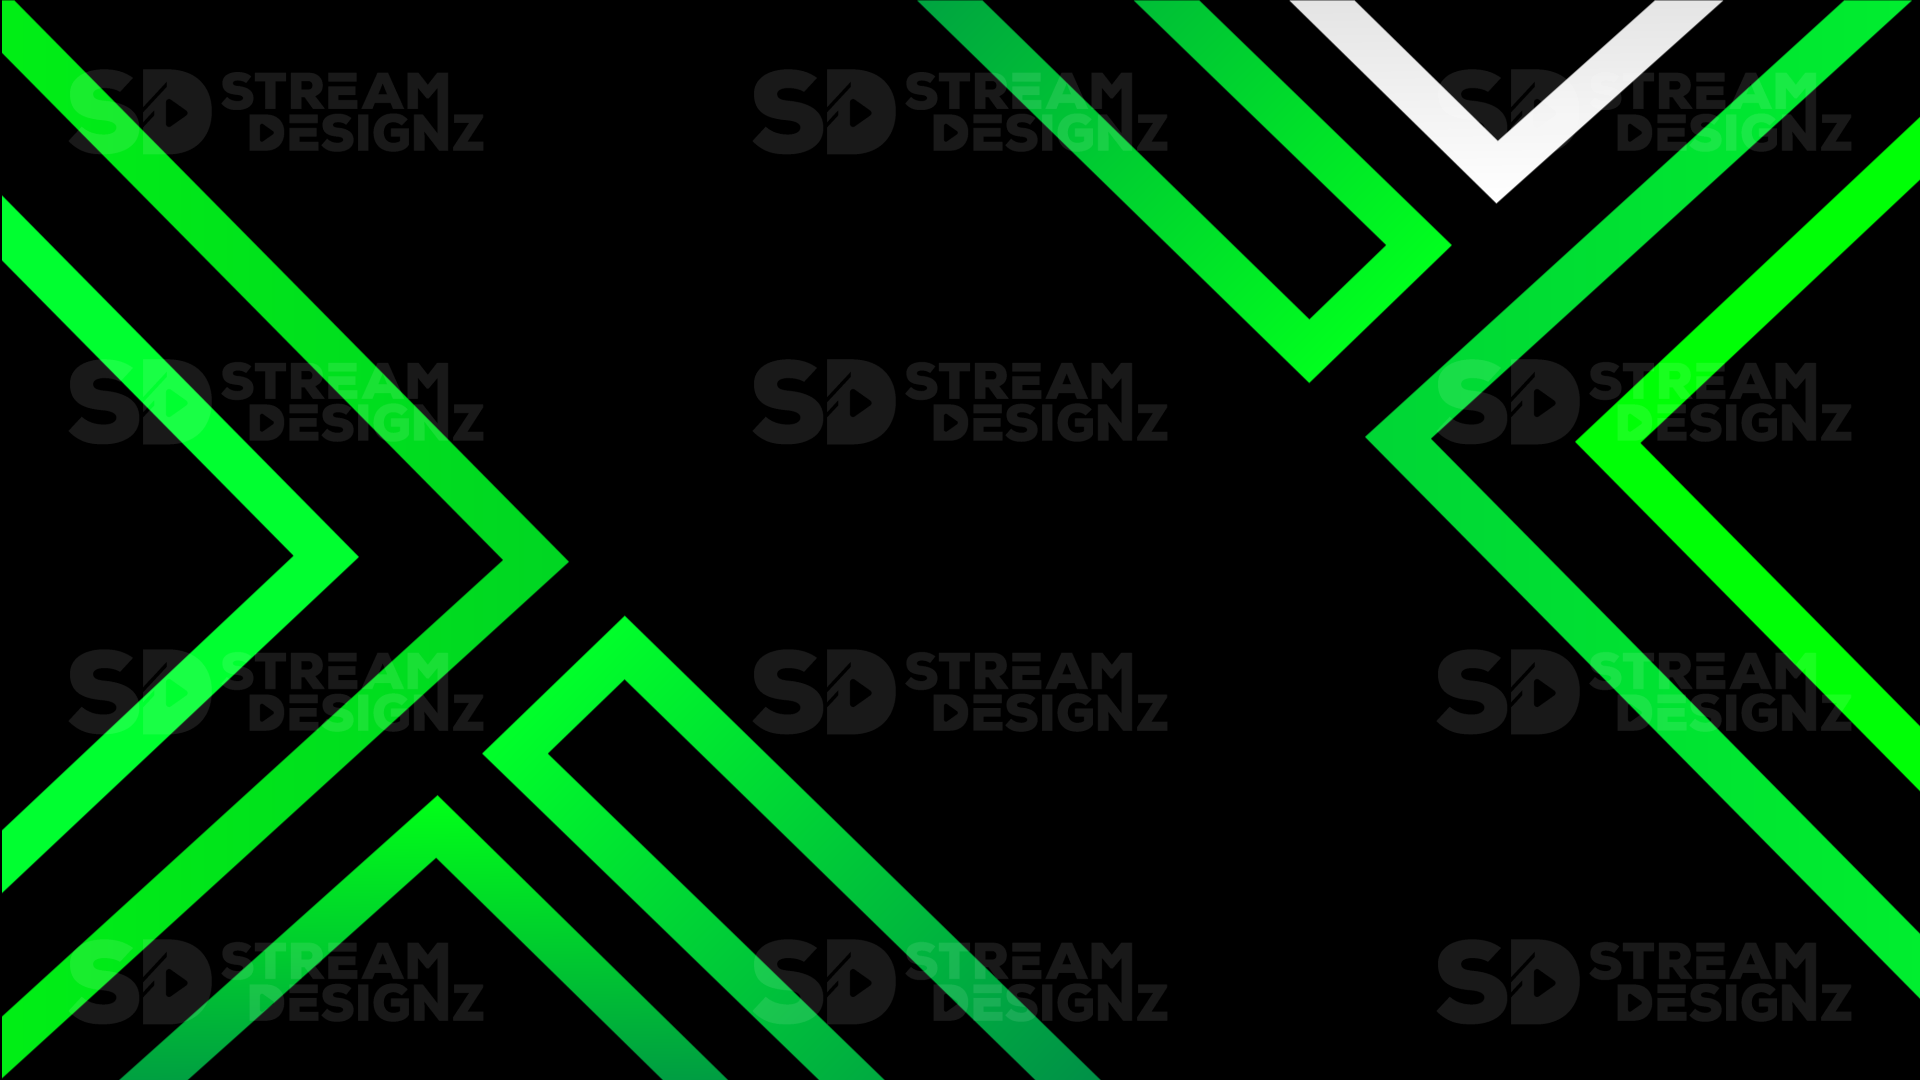 Stinger transition green lantern preview video stream designz